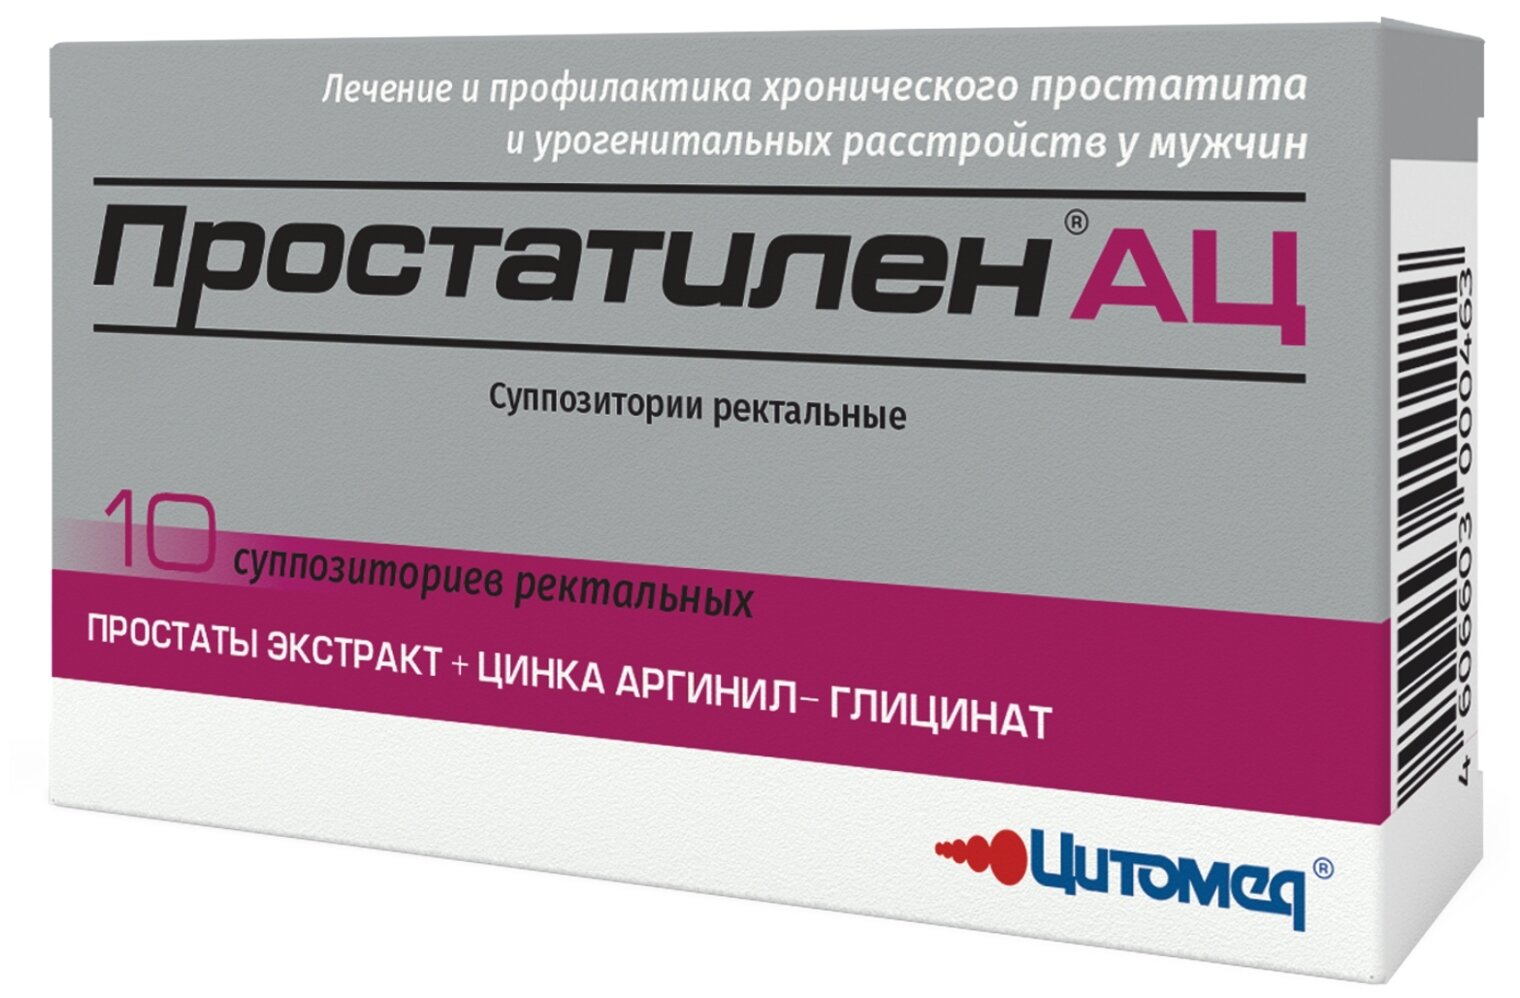 Простатилен АЦ супп. рект., 30 мг+180 мг, 10 шт.